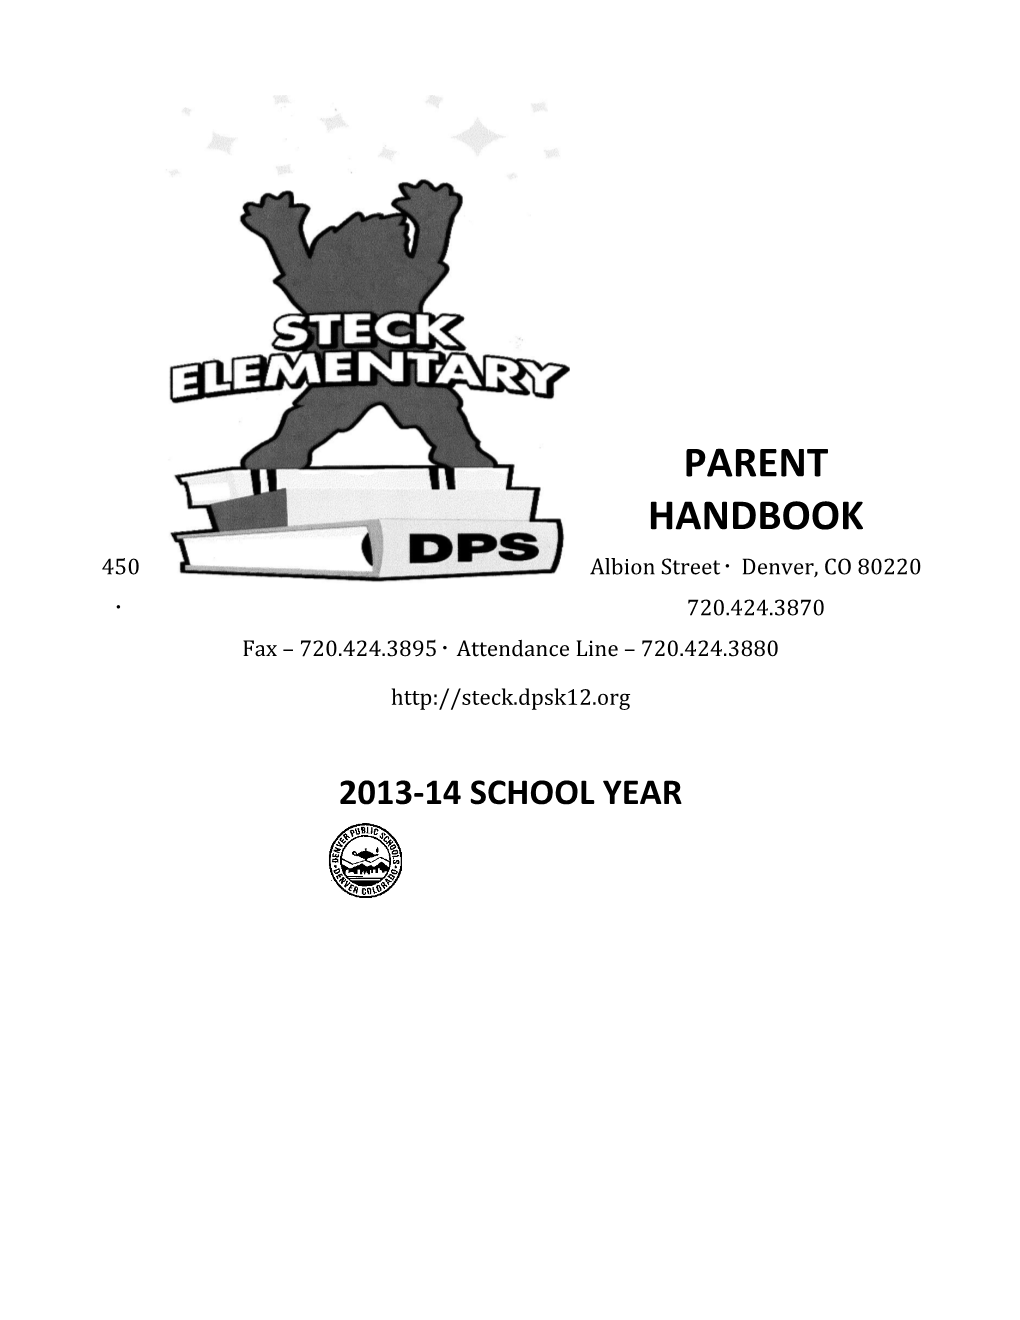 Steck Elementary Staff